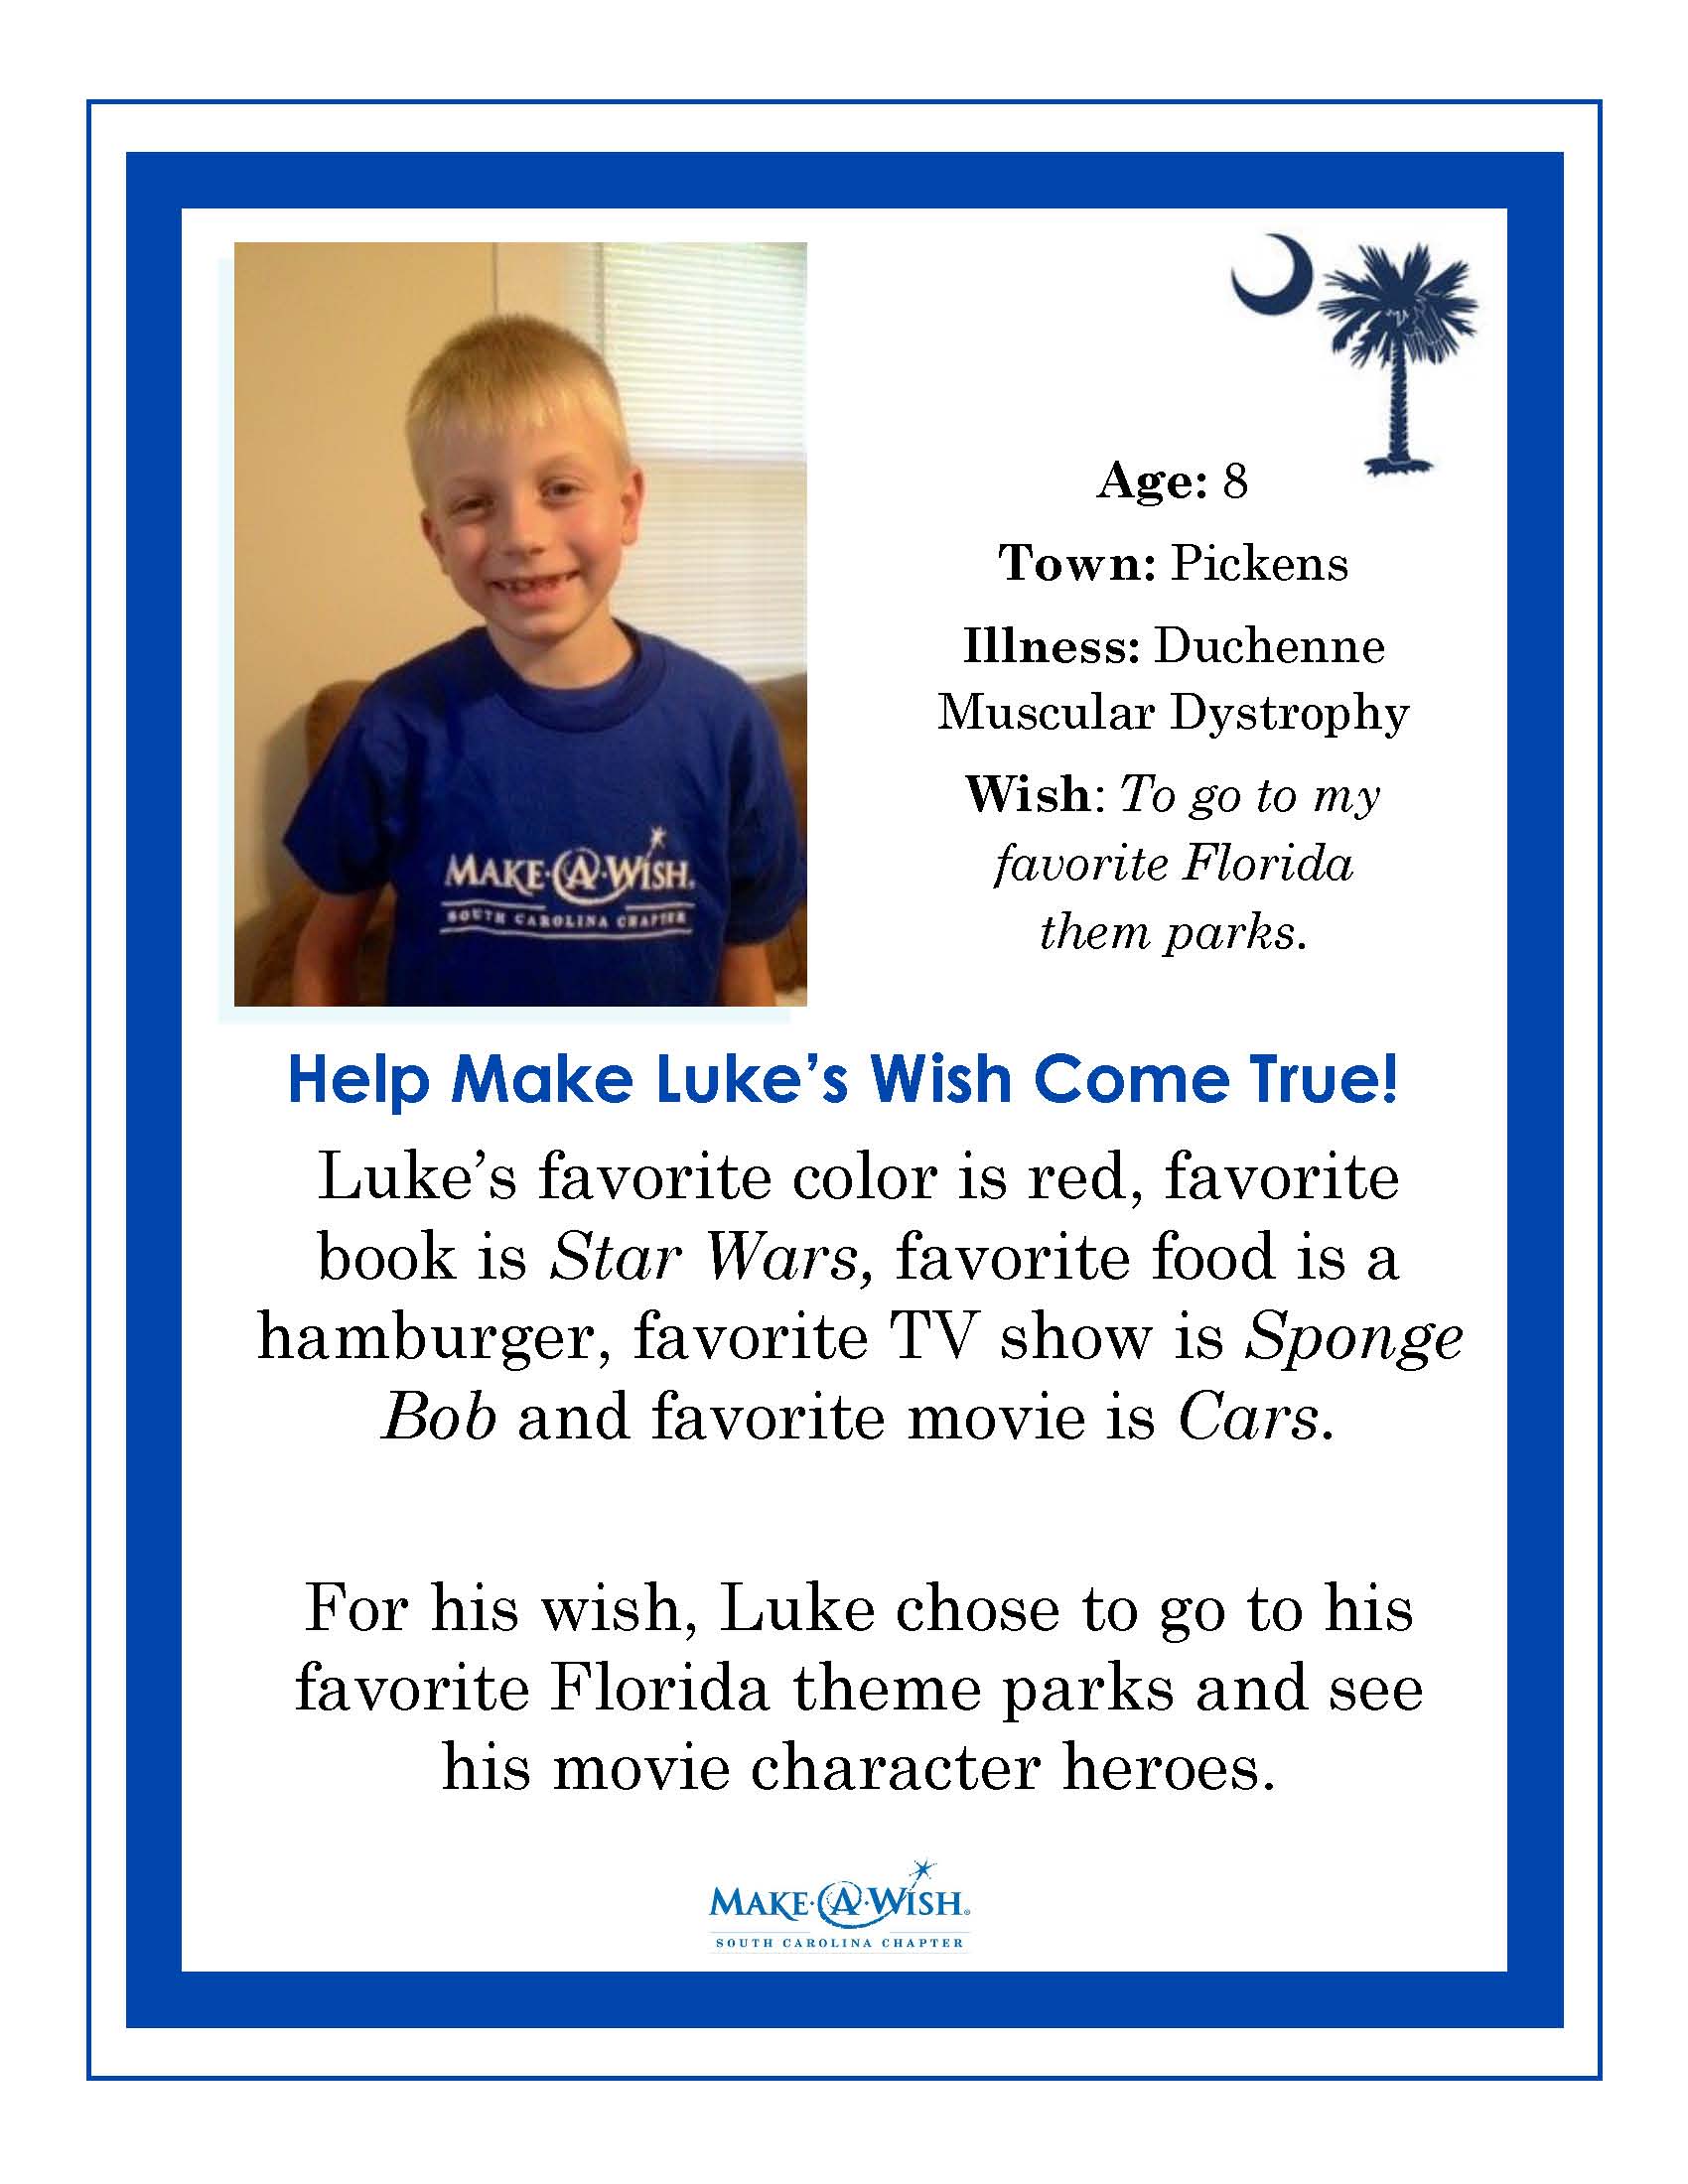 help make Luke's wish come true